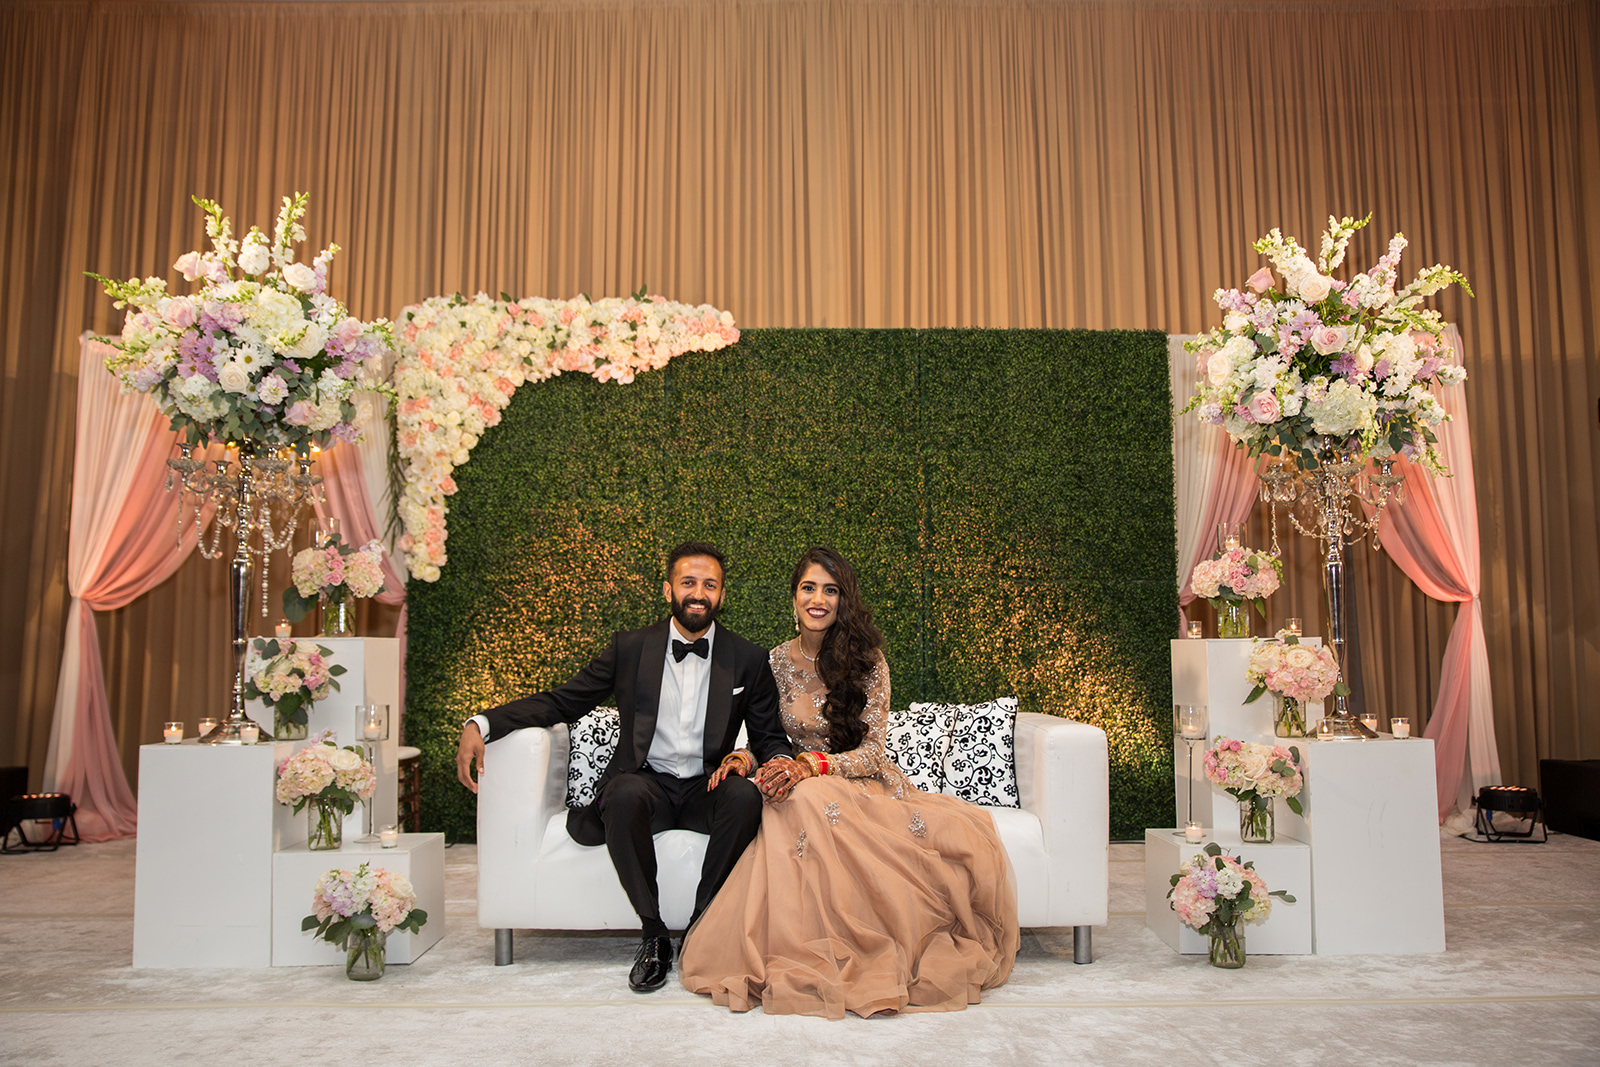 Le Cape Weddings - Sumeet and Chavi - Reception Family Formals   -2.jpg